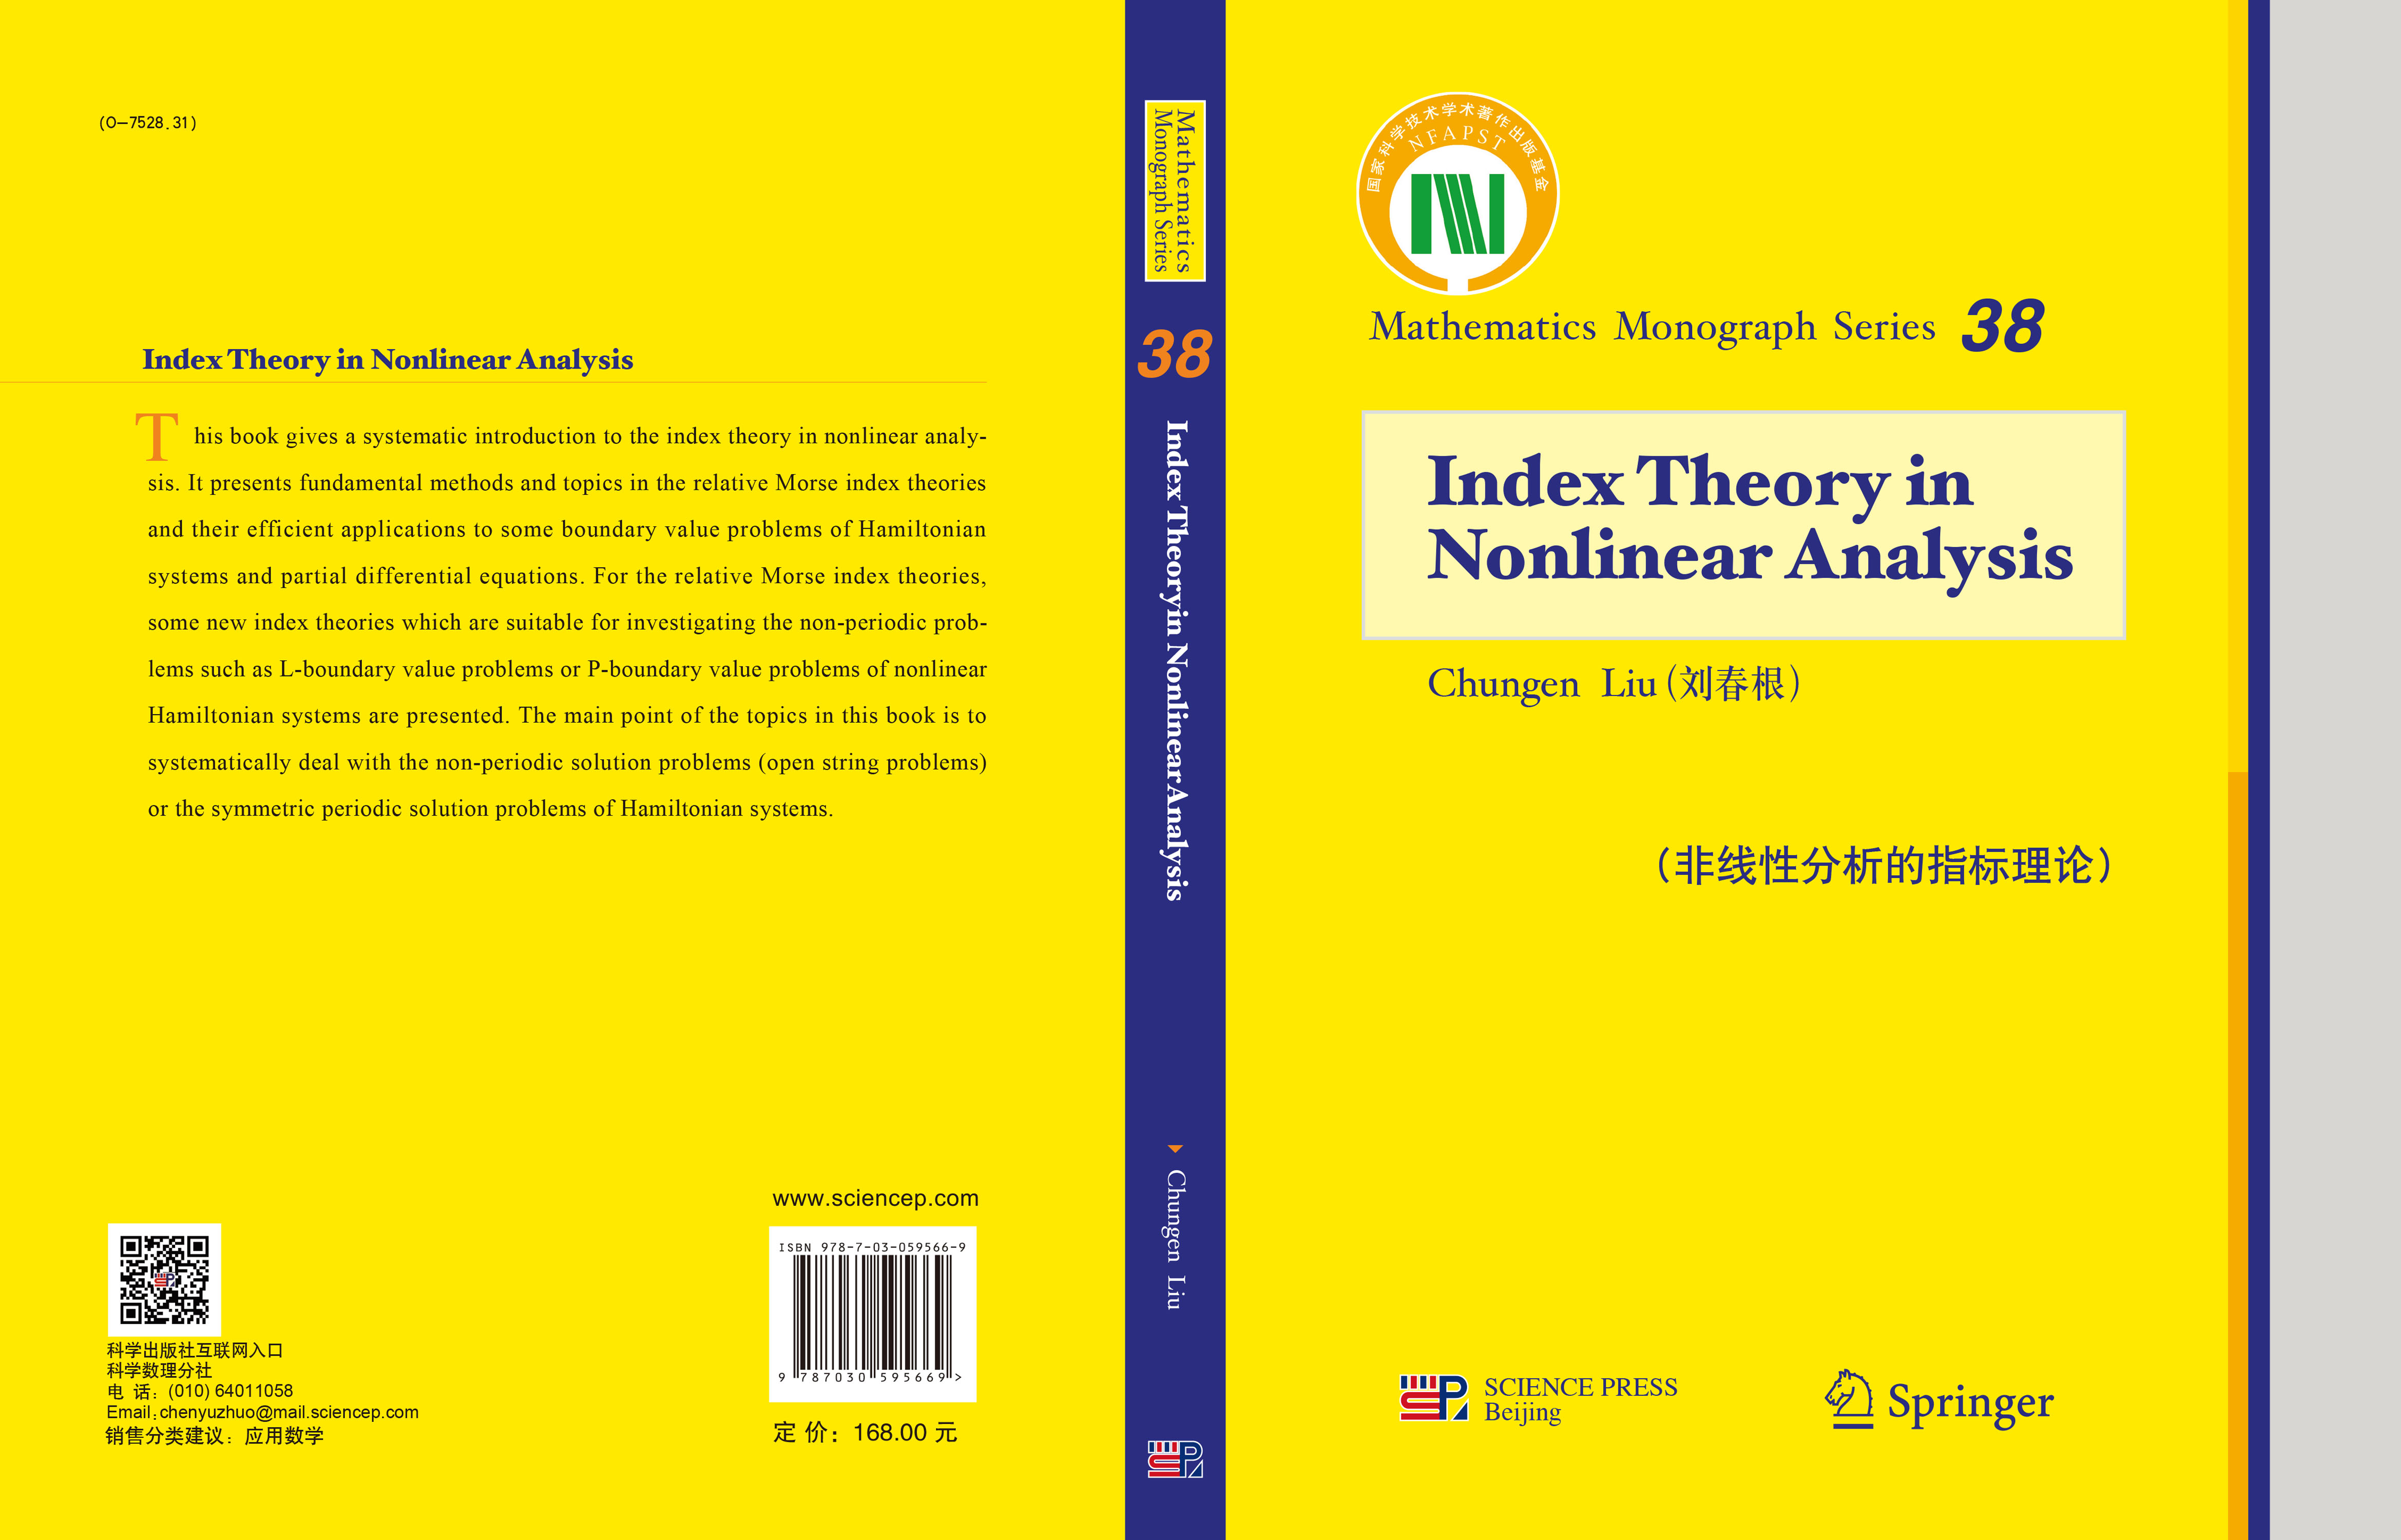 Index Theory in Nonlinear Analysis(非线性分析的指标理论）